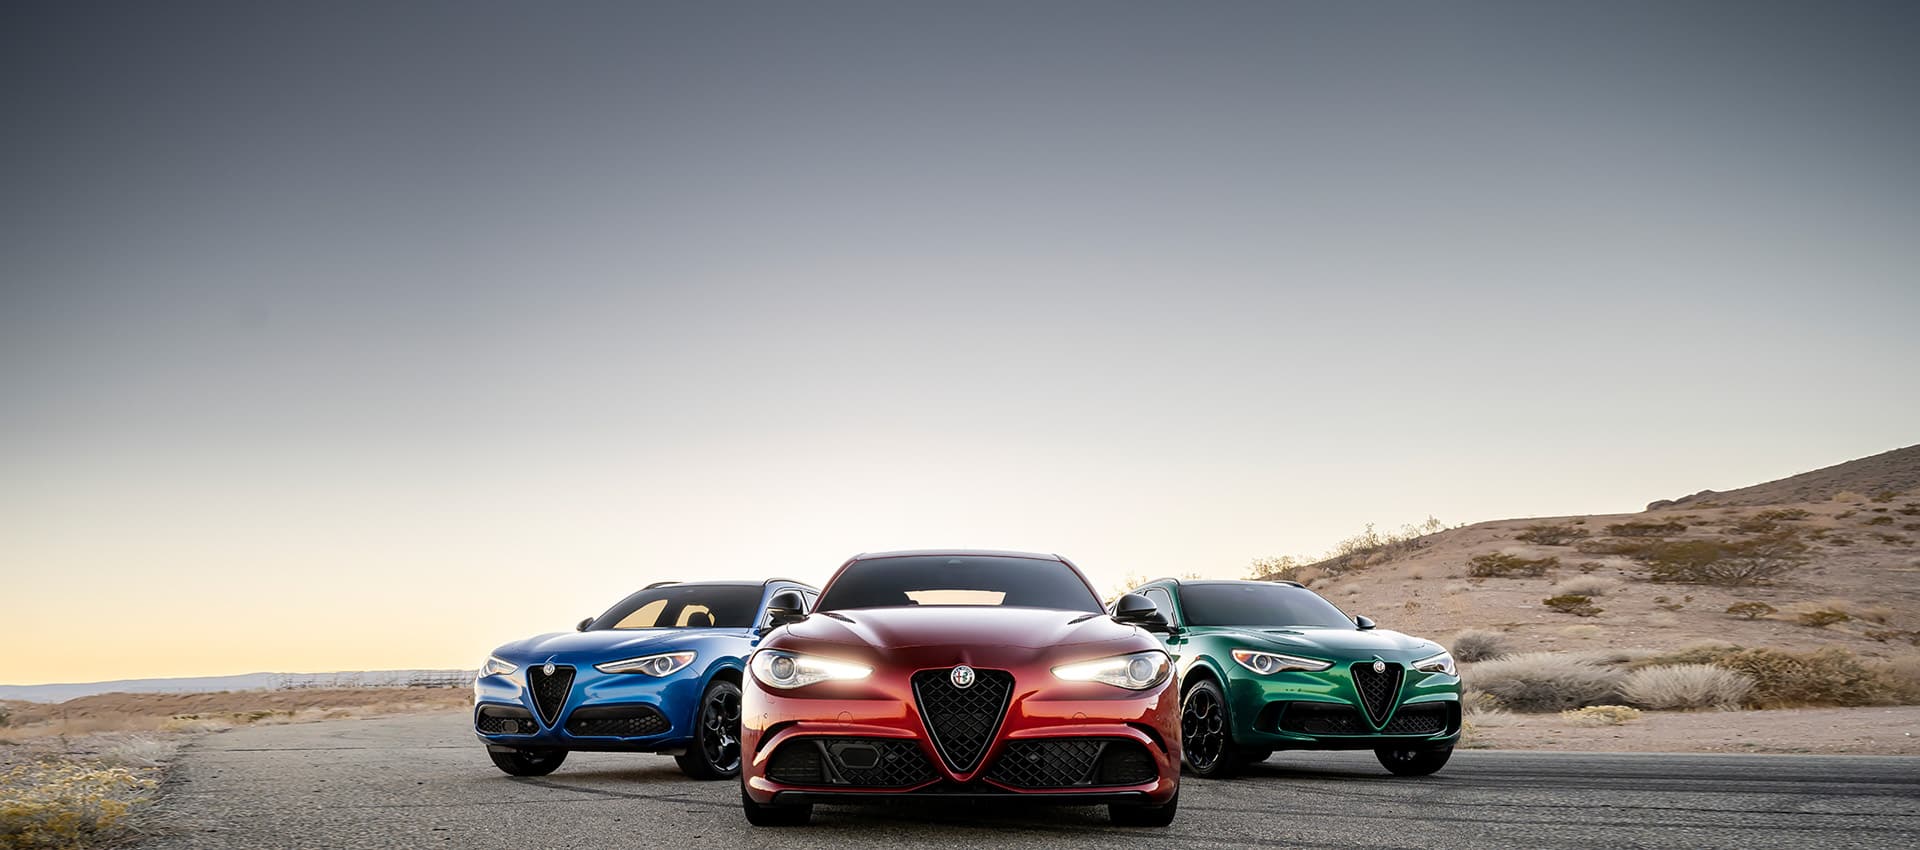 Alfa Romeo USA - Luxury Italian Sports Cars & SUVs image